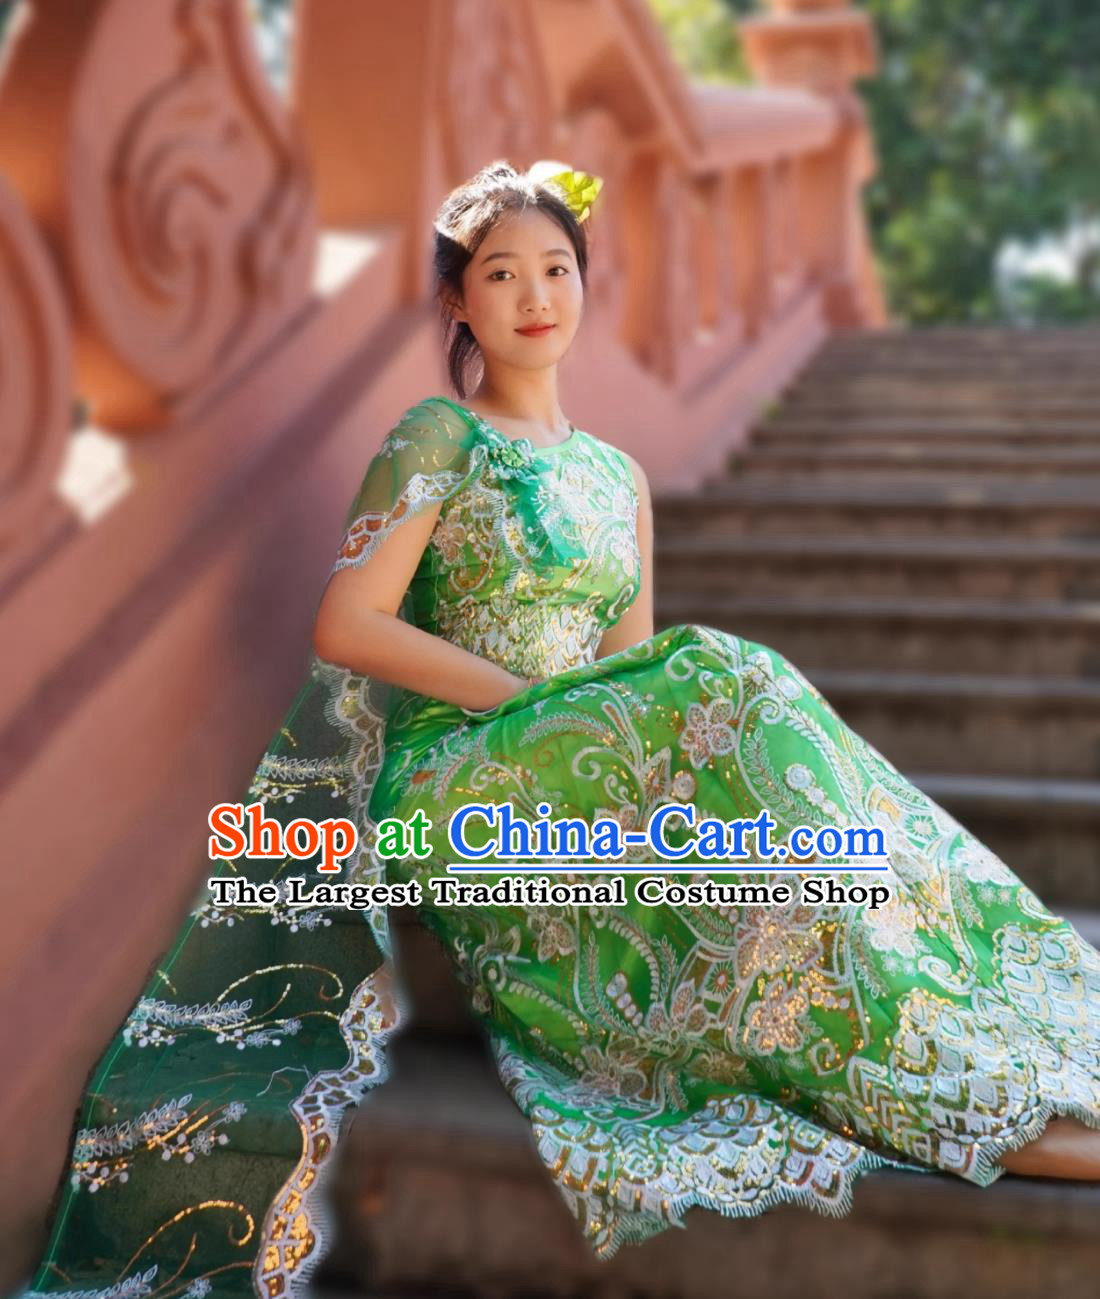 China Xishuangbanna Dai Ethnic Clothing Water Splashing Festival Dance Green Top And Long Skirt Sleeveless Dai Costume